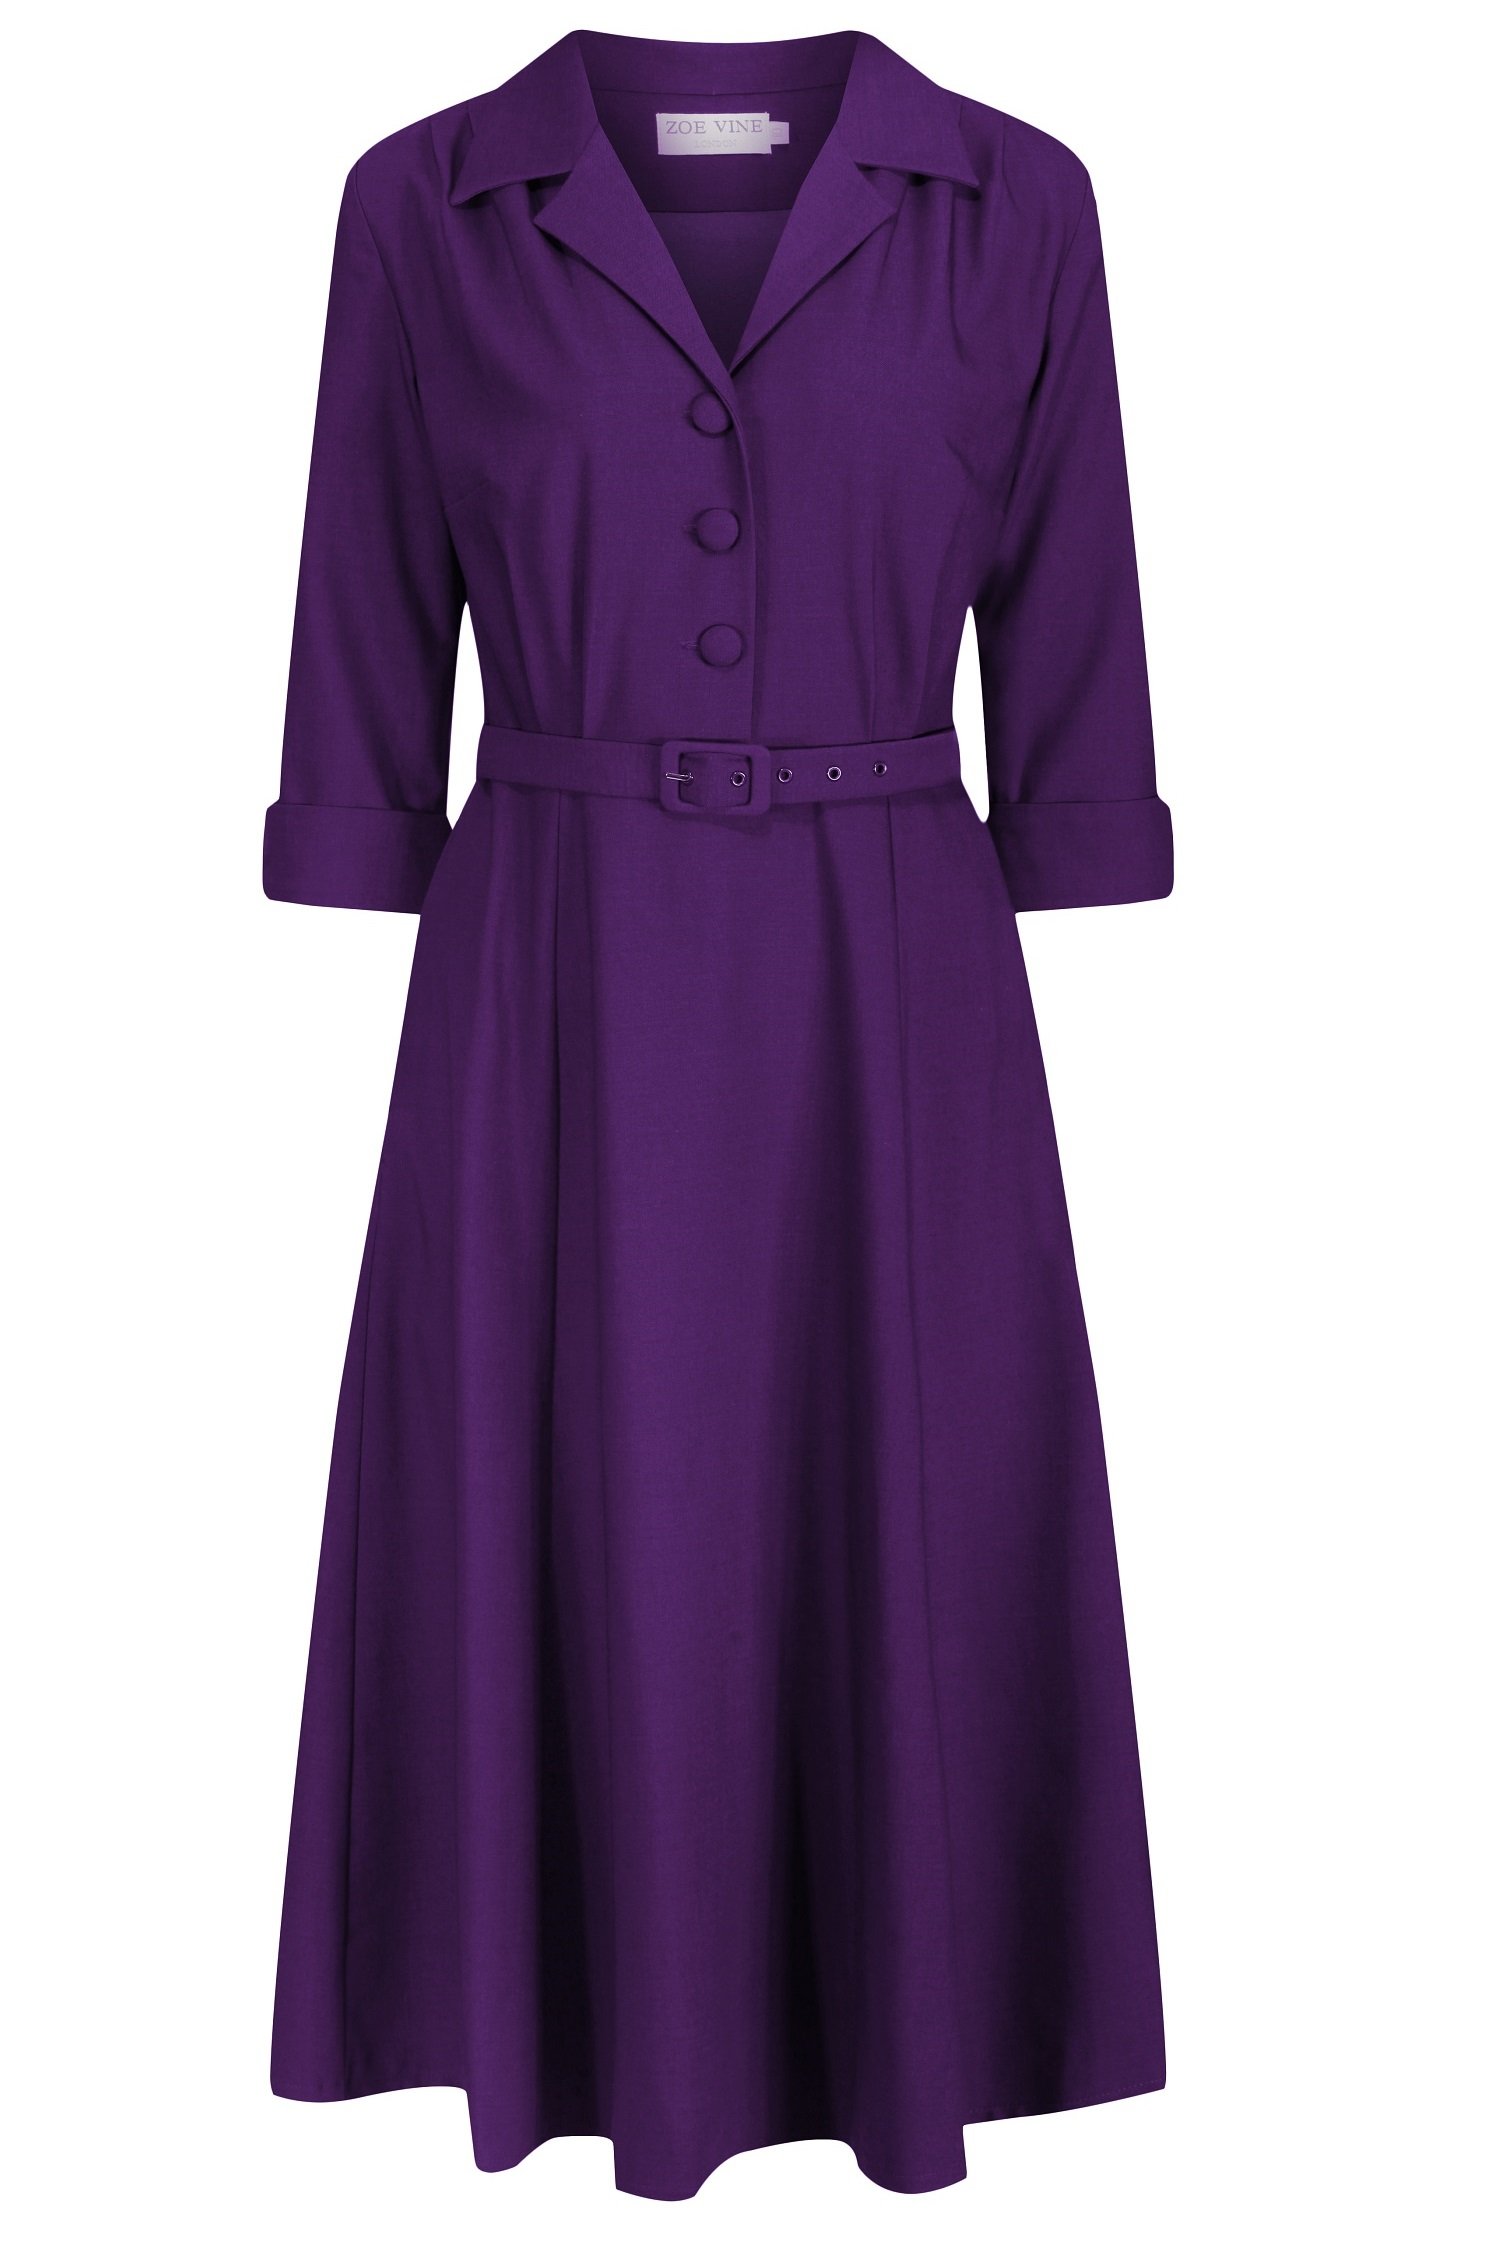 Purple Mabel Shirt Dress by Zoe Vine ...